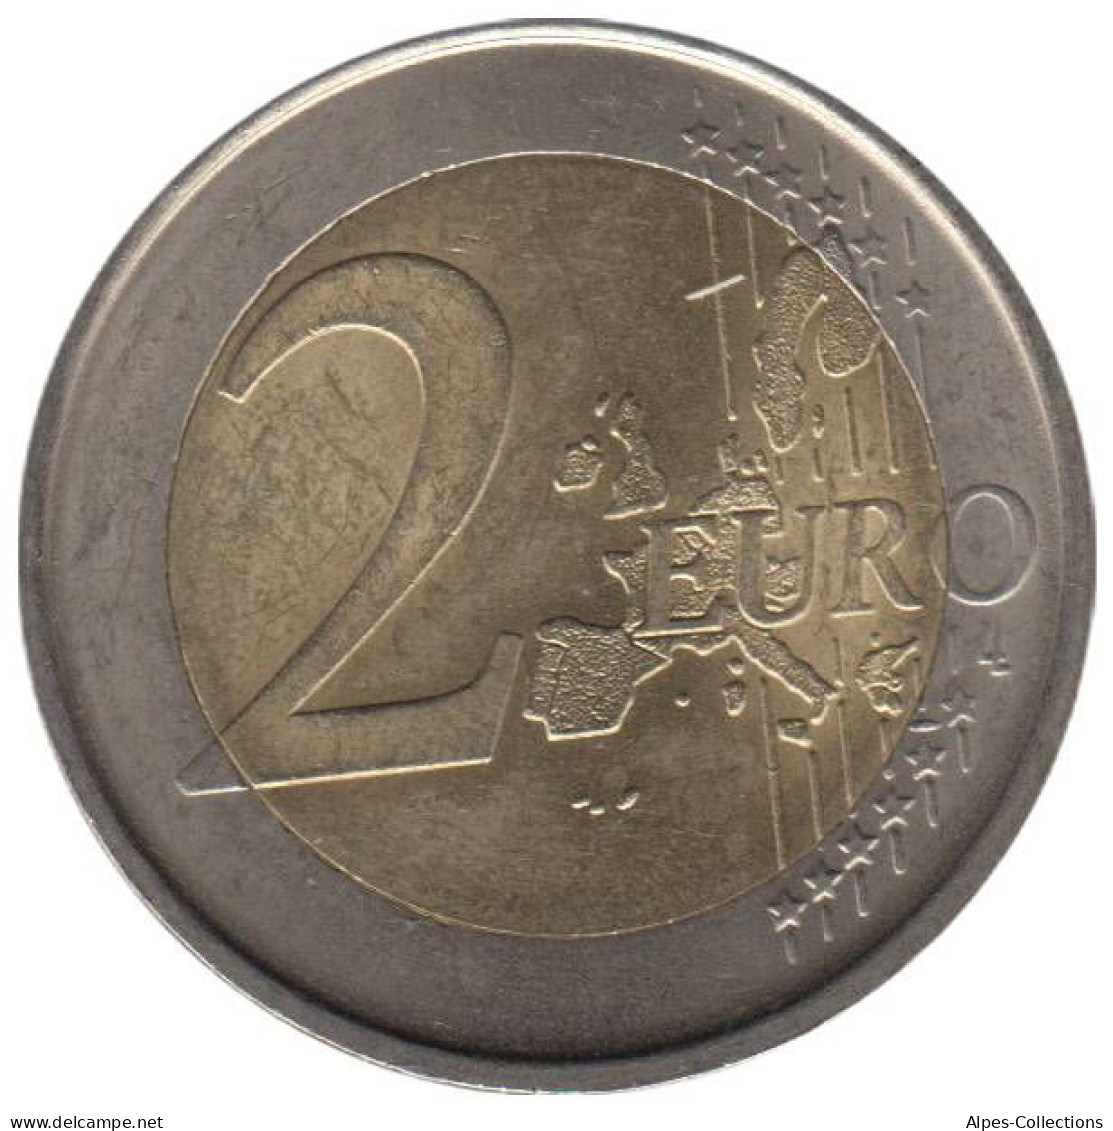 ES20006.1 - ESPAGNE - 2 Euros - 2006 - Spanje